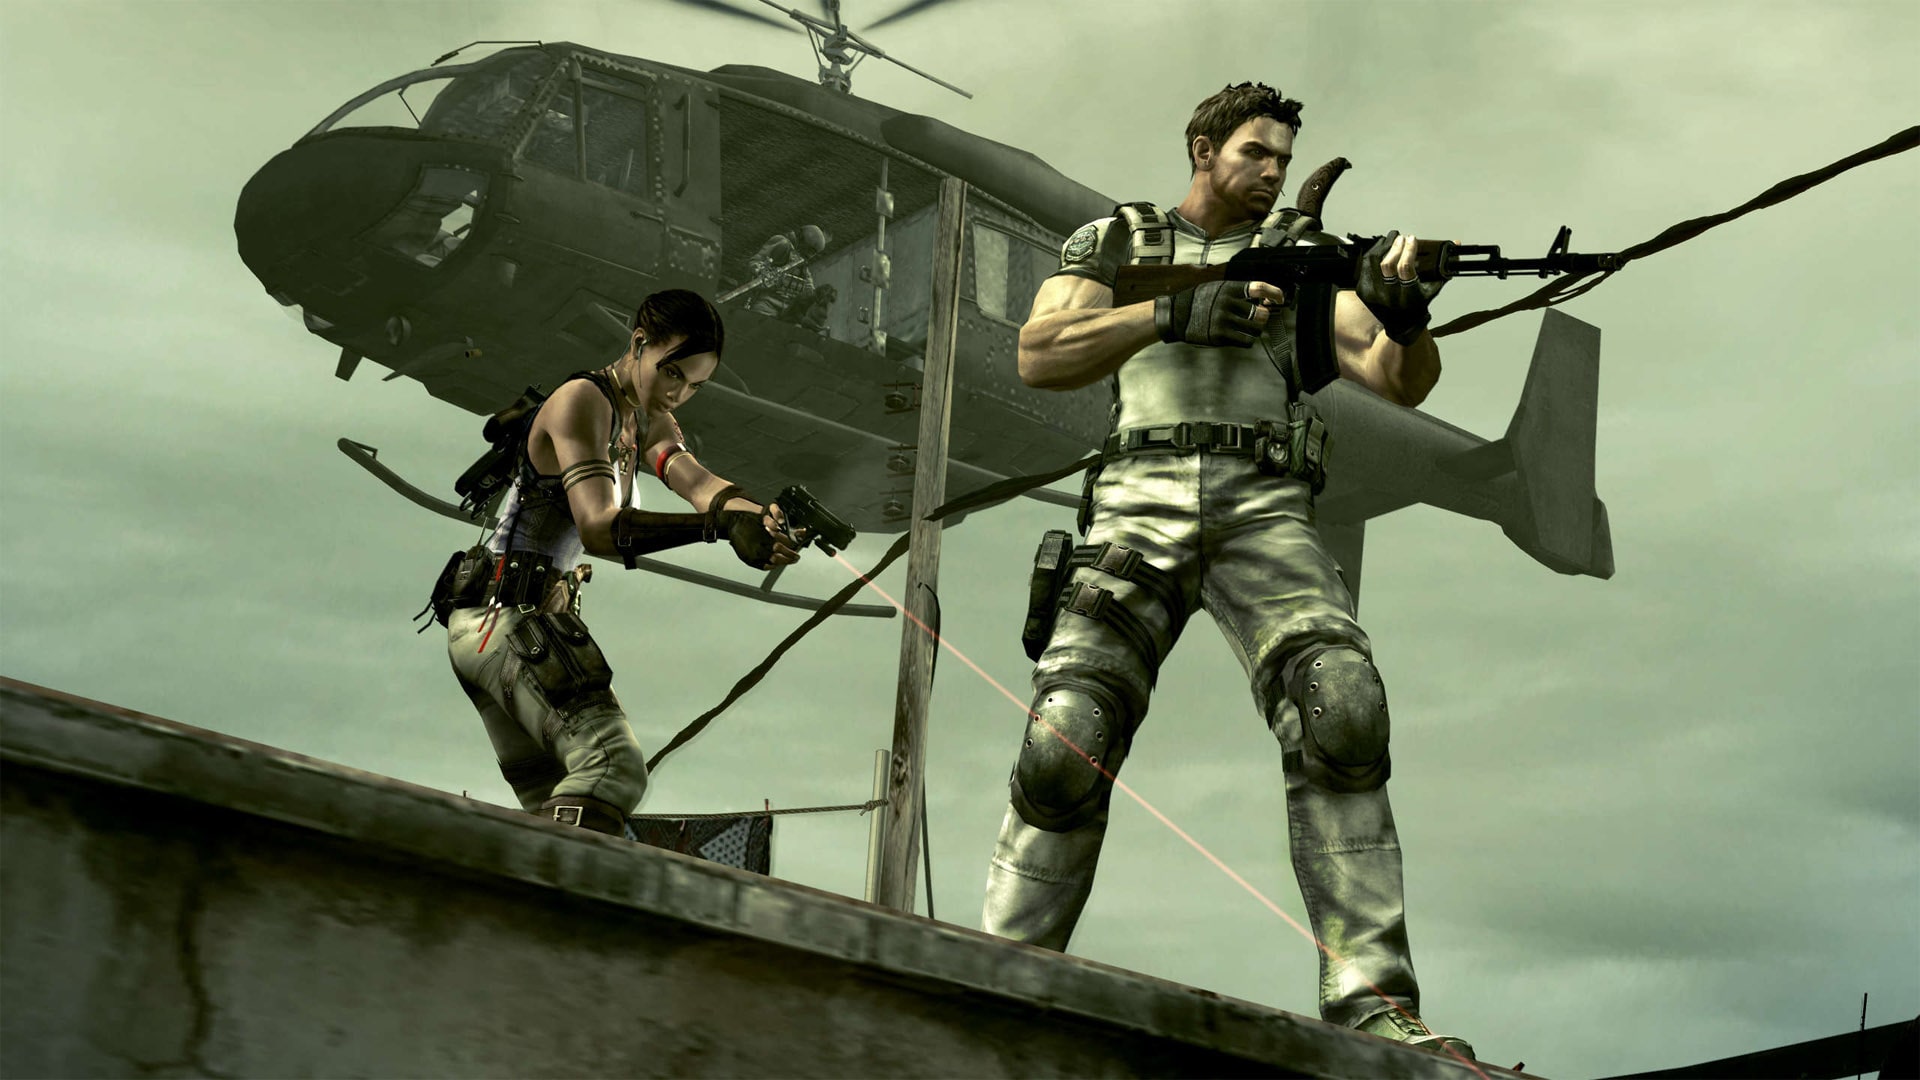 Resident Evil 5 HD - PlayStation 4, PlayStation 4